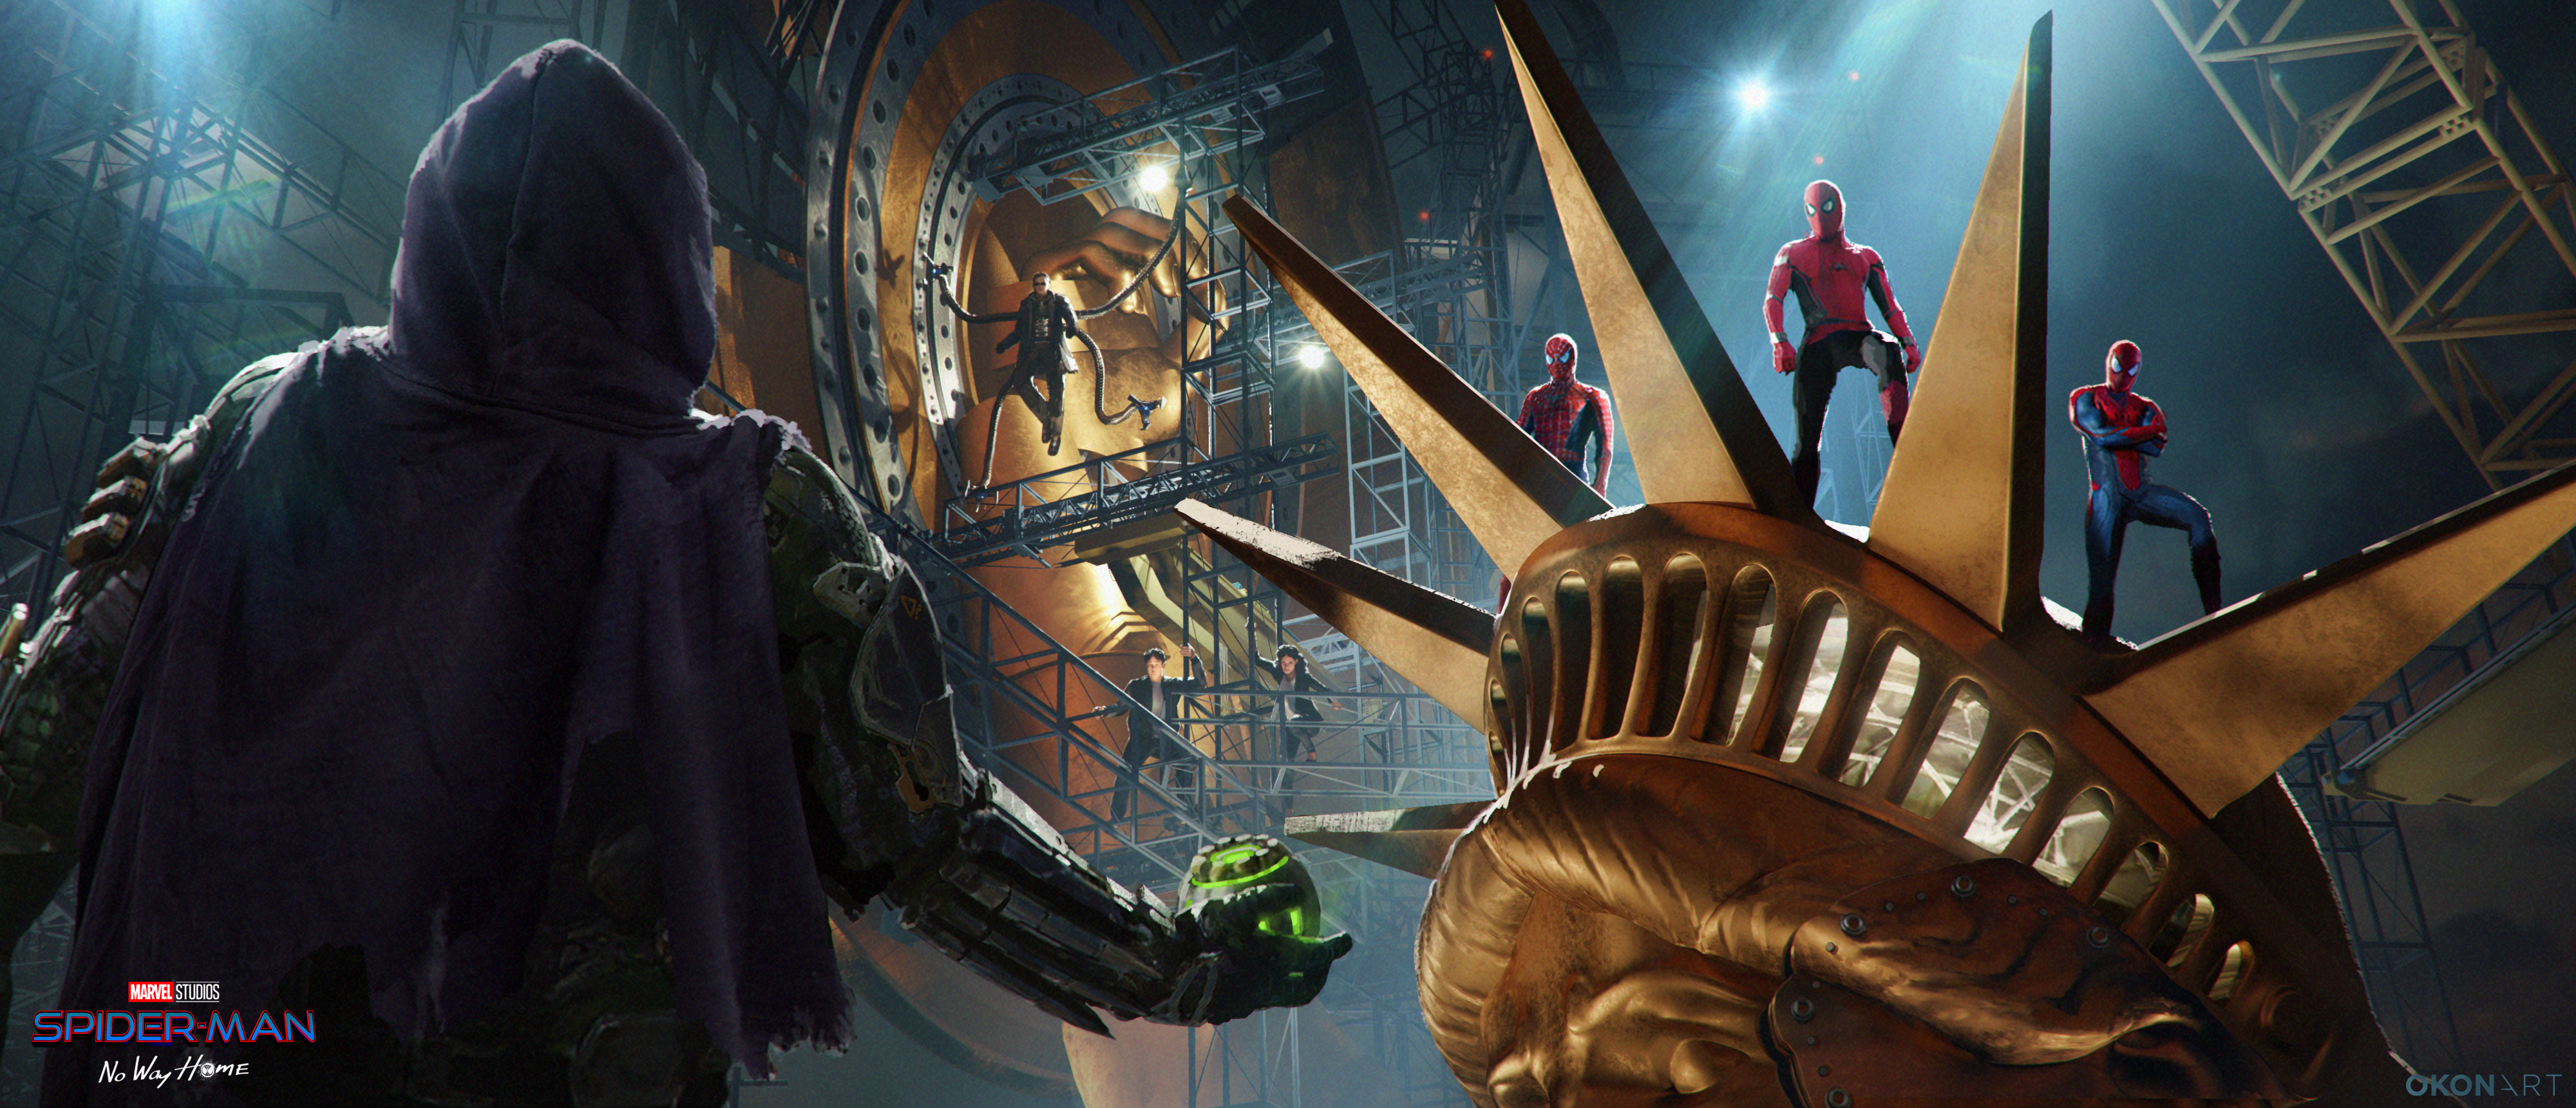 The three Spider-Men and Doc Ock facing Green Goblin